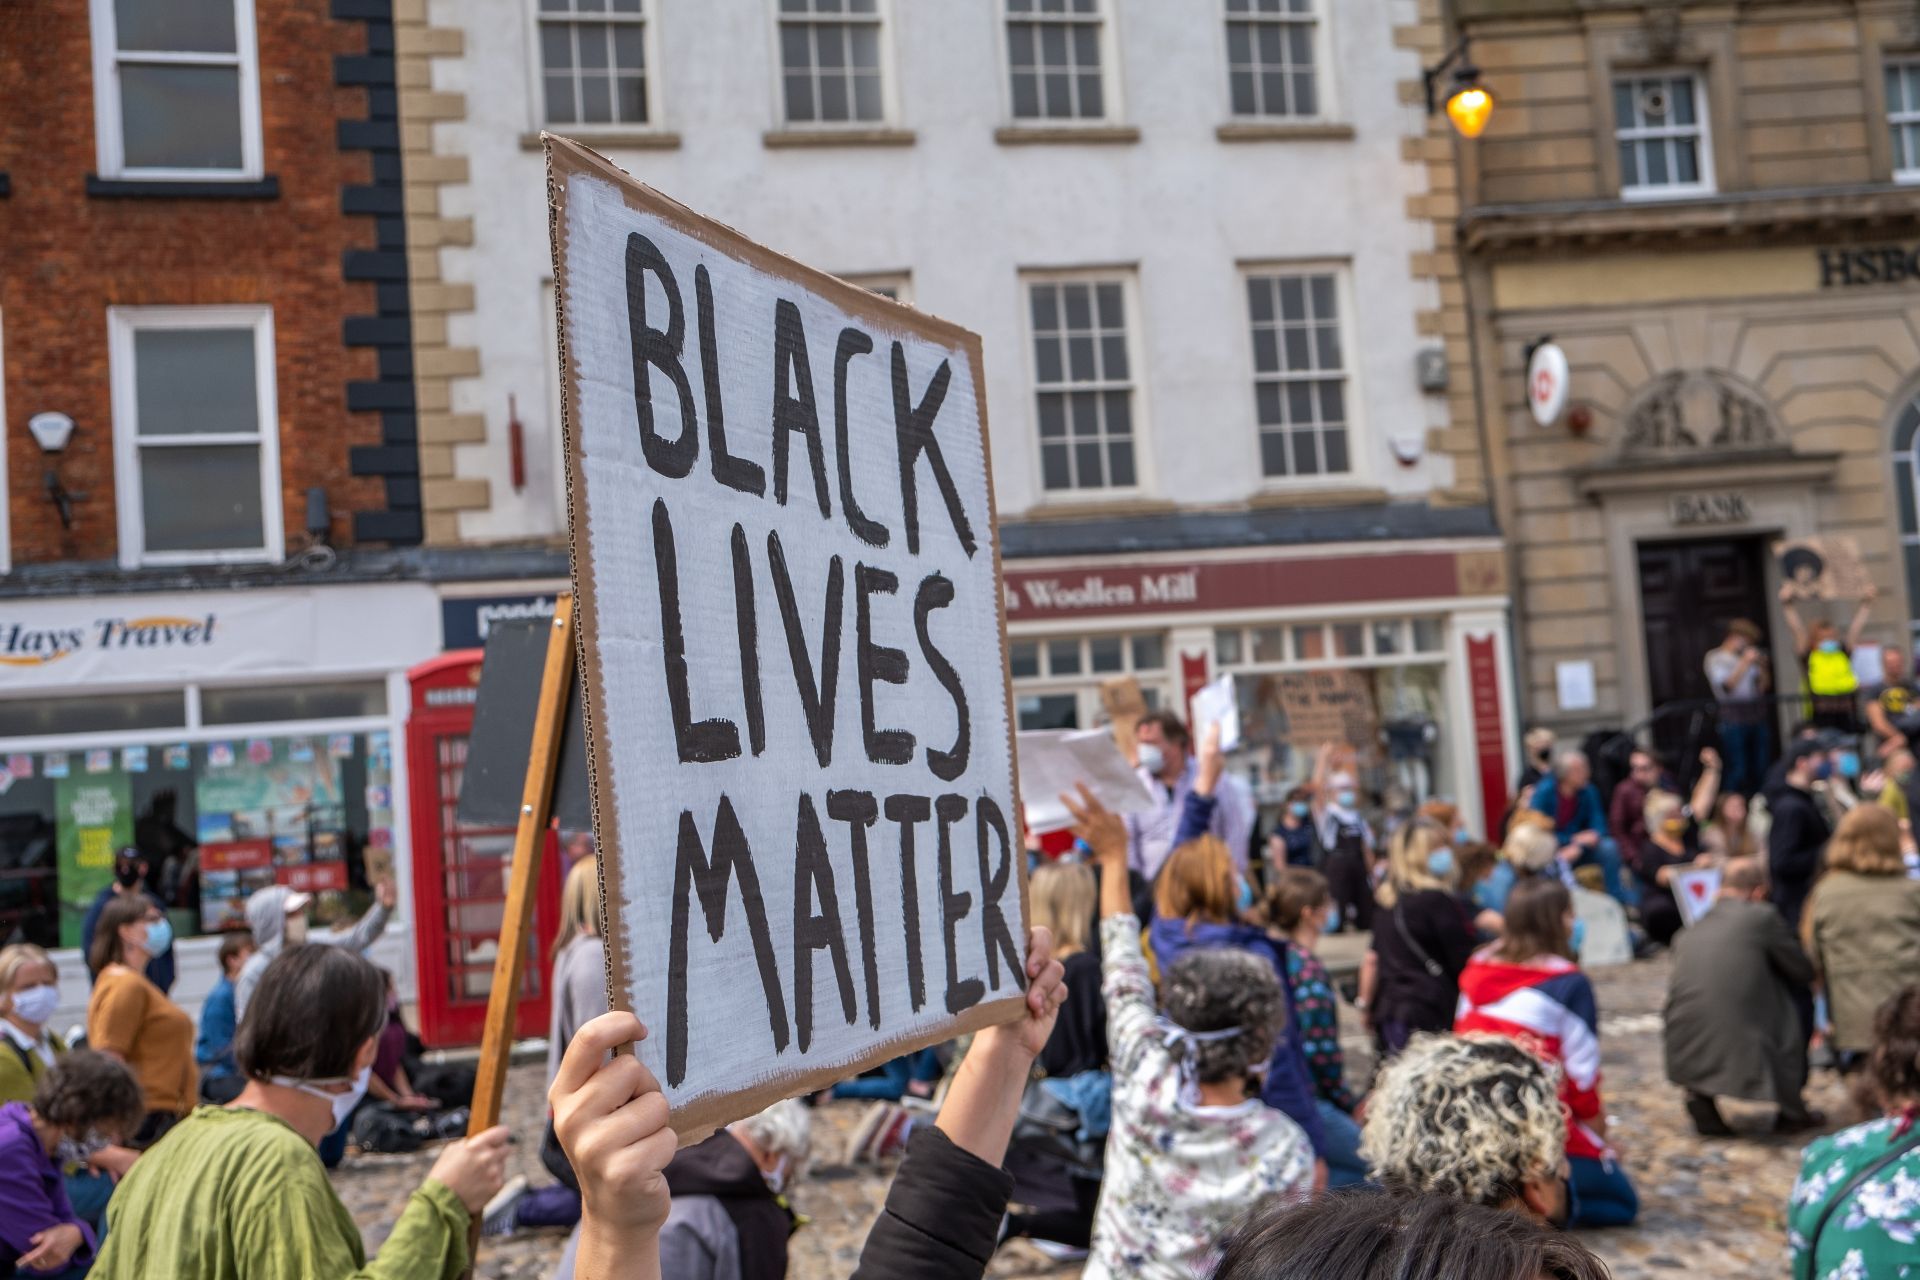 Richmond, North Yorkshire, UK - June 14, 2020: A Black Lives Matter placard is held up above a kneeling crowd at a protest in Richmond, North Yorkshire — BLM UK